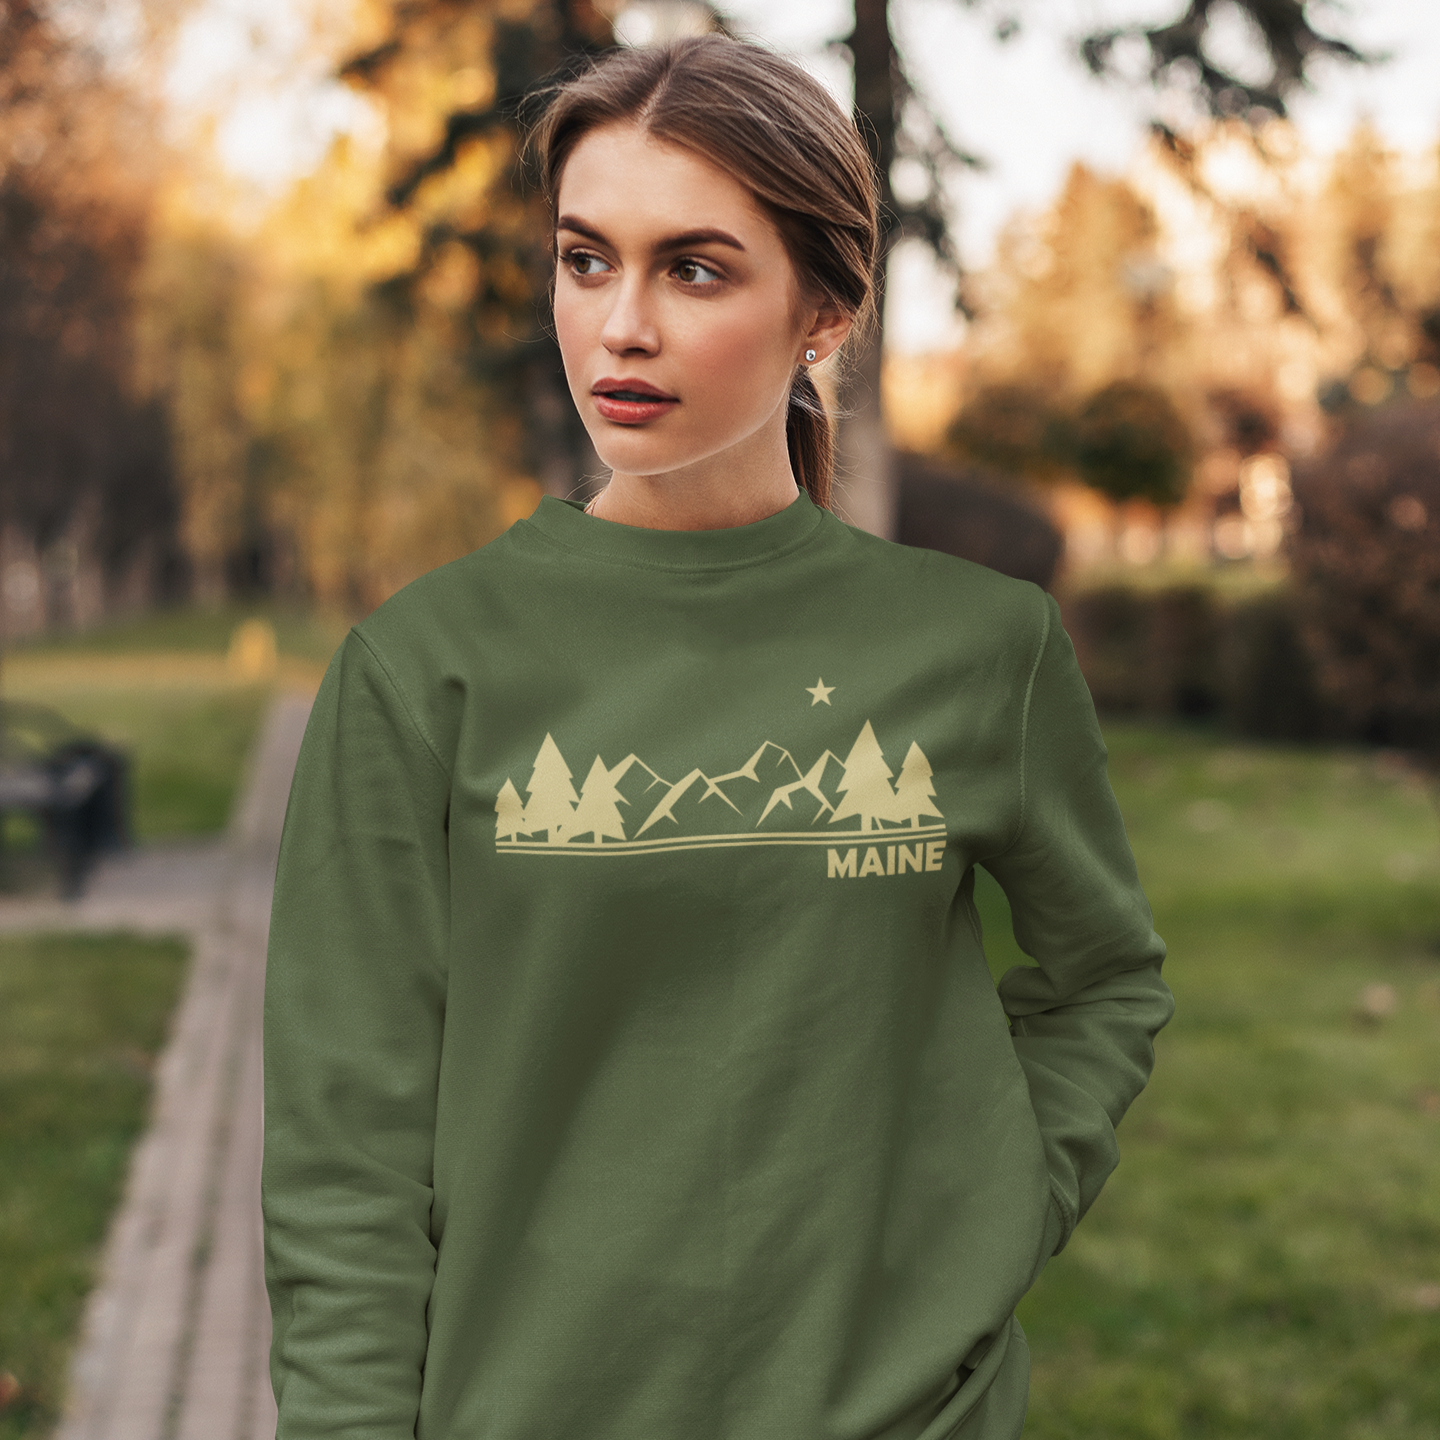 Maine Mountains - Crewneck sweatshirt